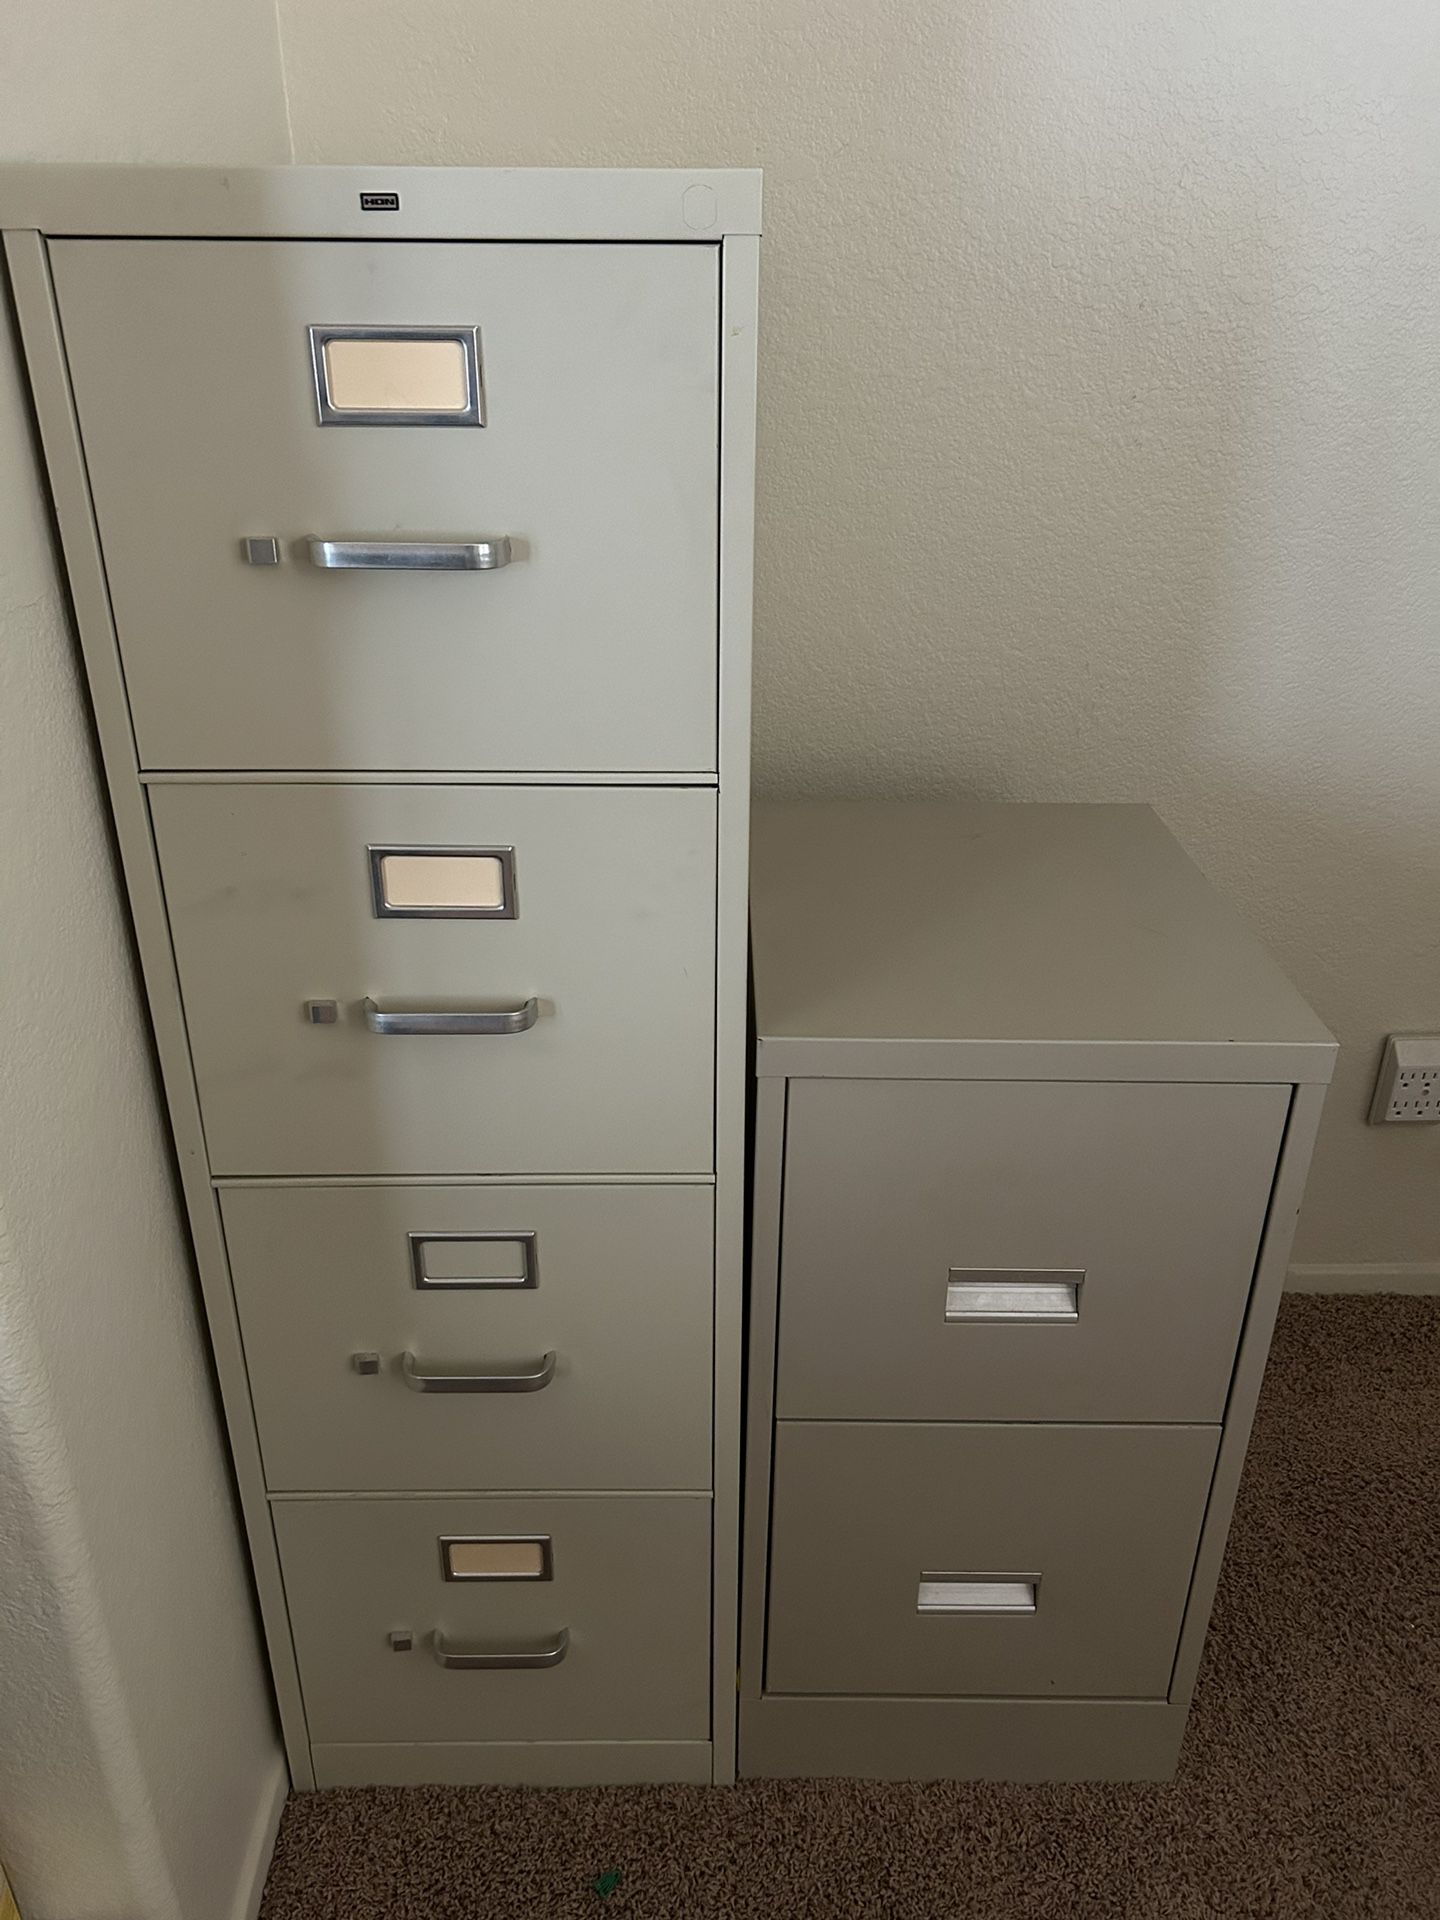 File Cabinets!